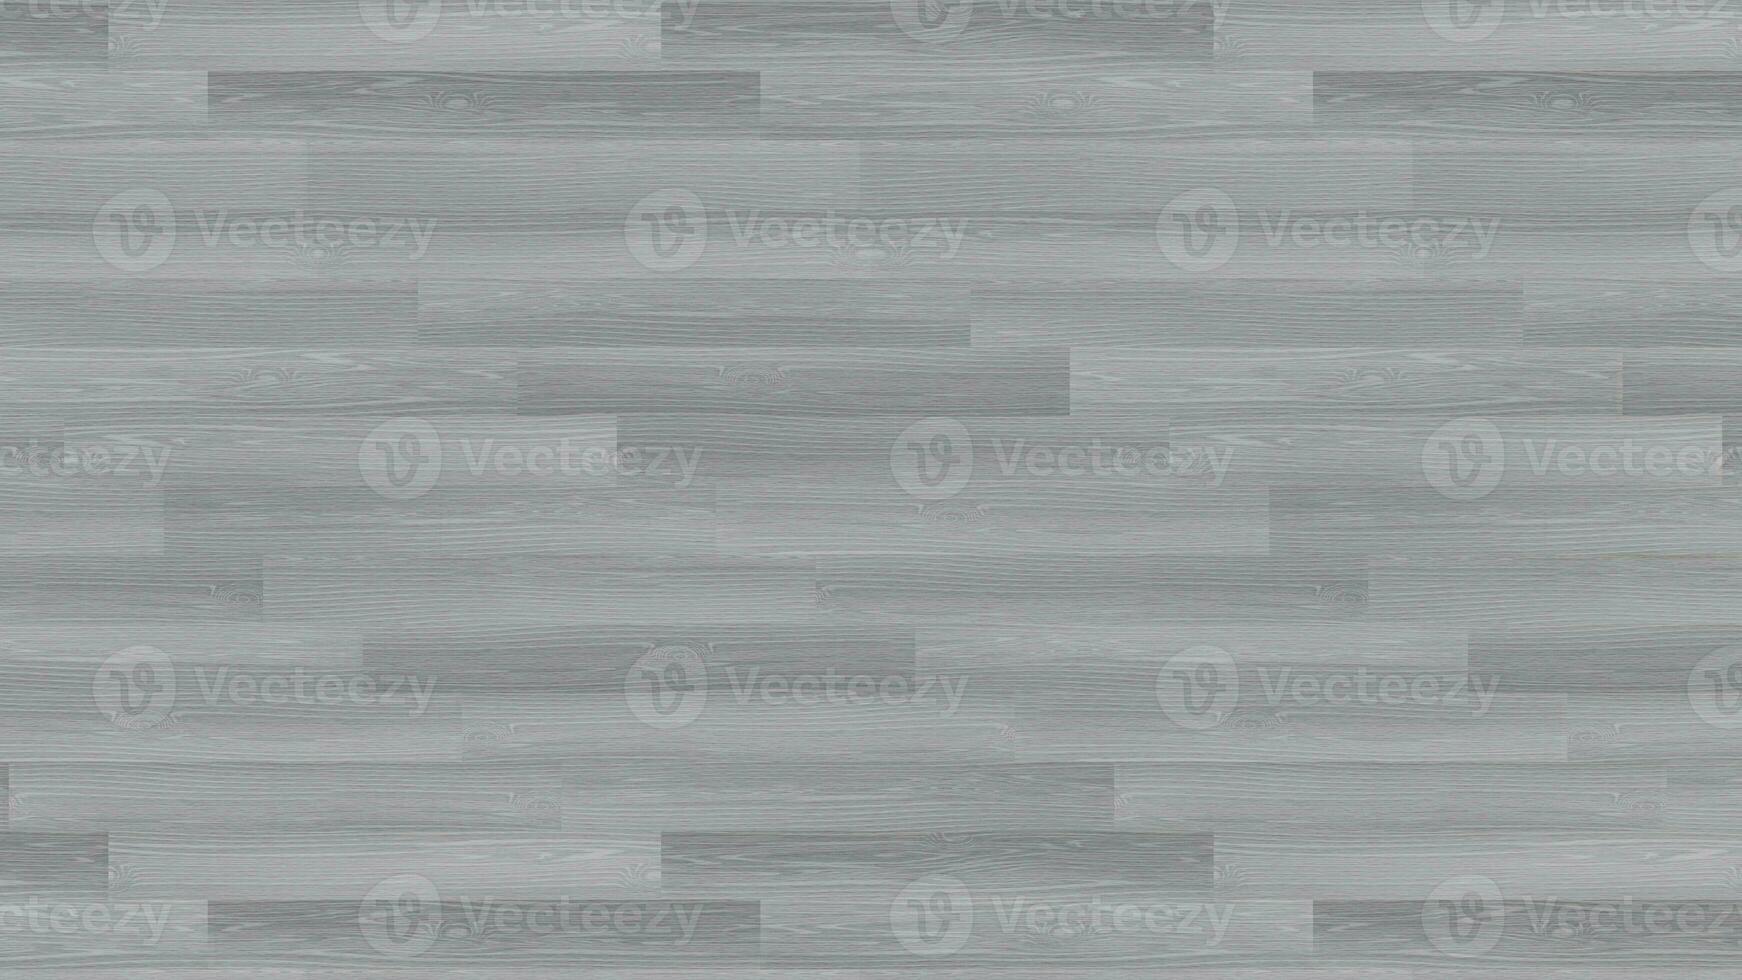 Wood texture pattern background. photo